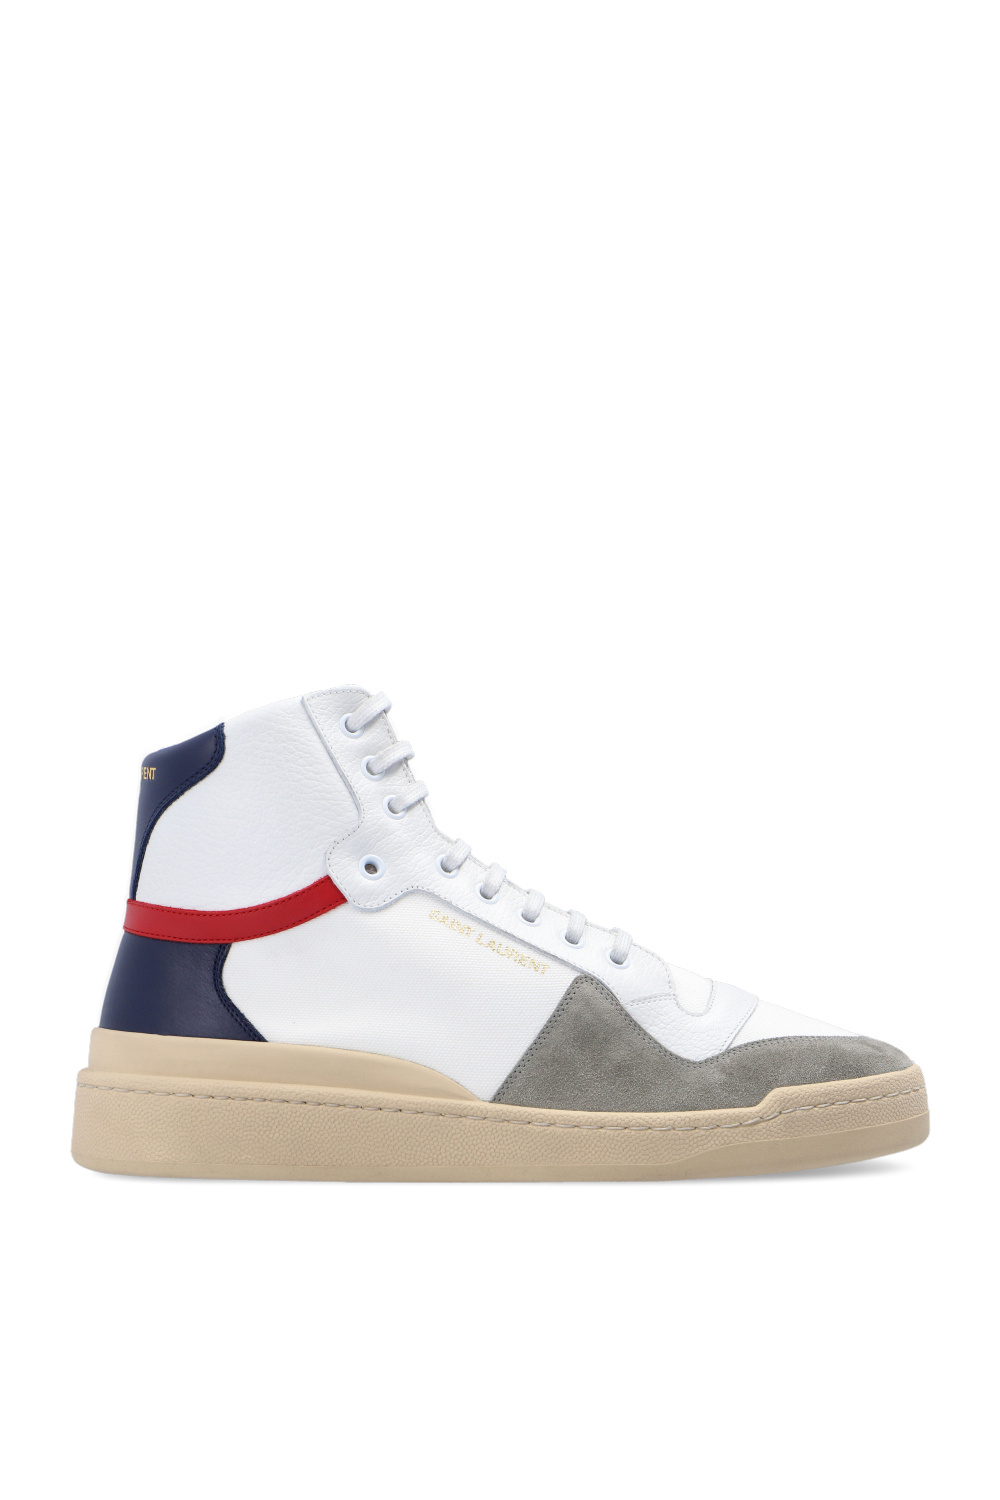 Saint Laurent 'SL24' high-top sneakers | Men's Shoes | Vitkac